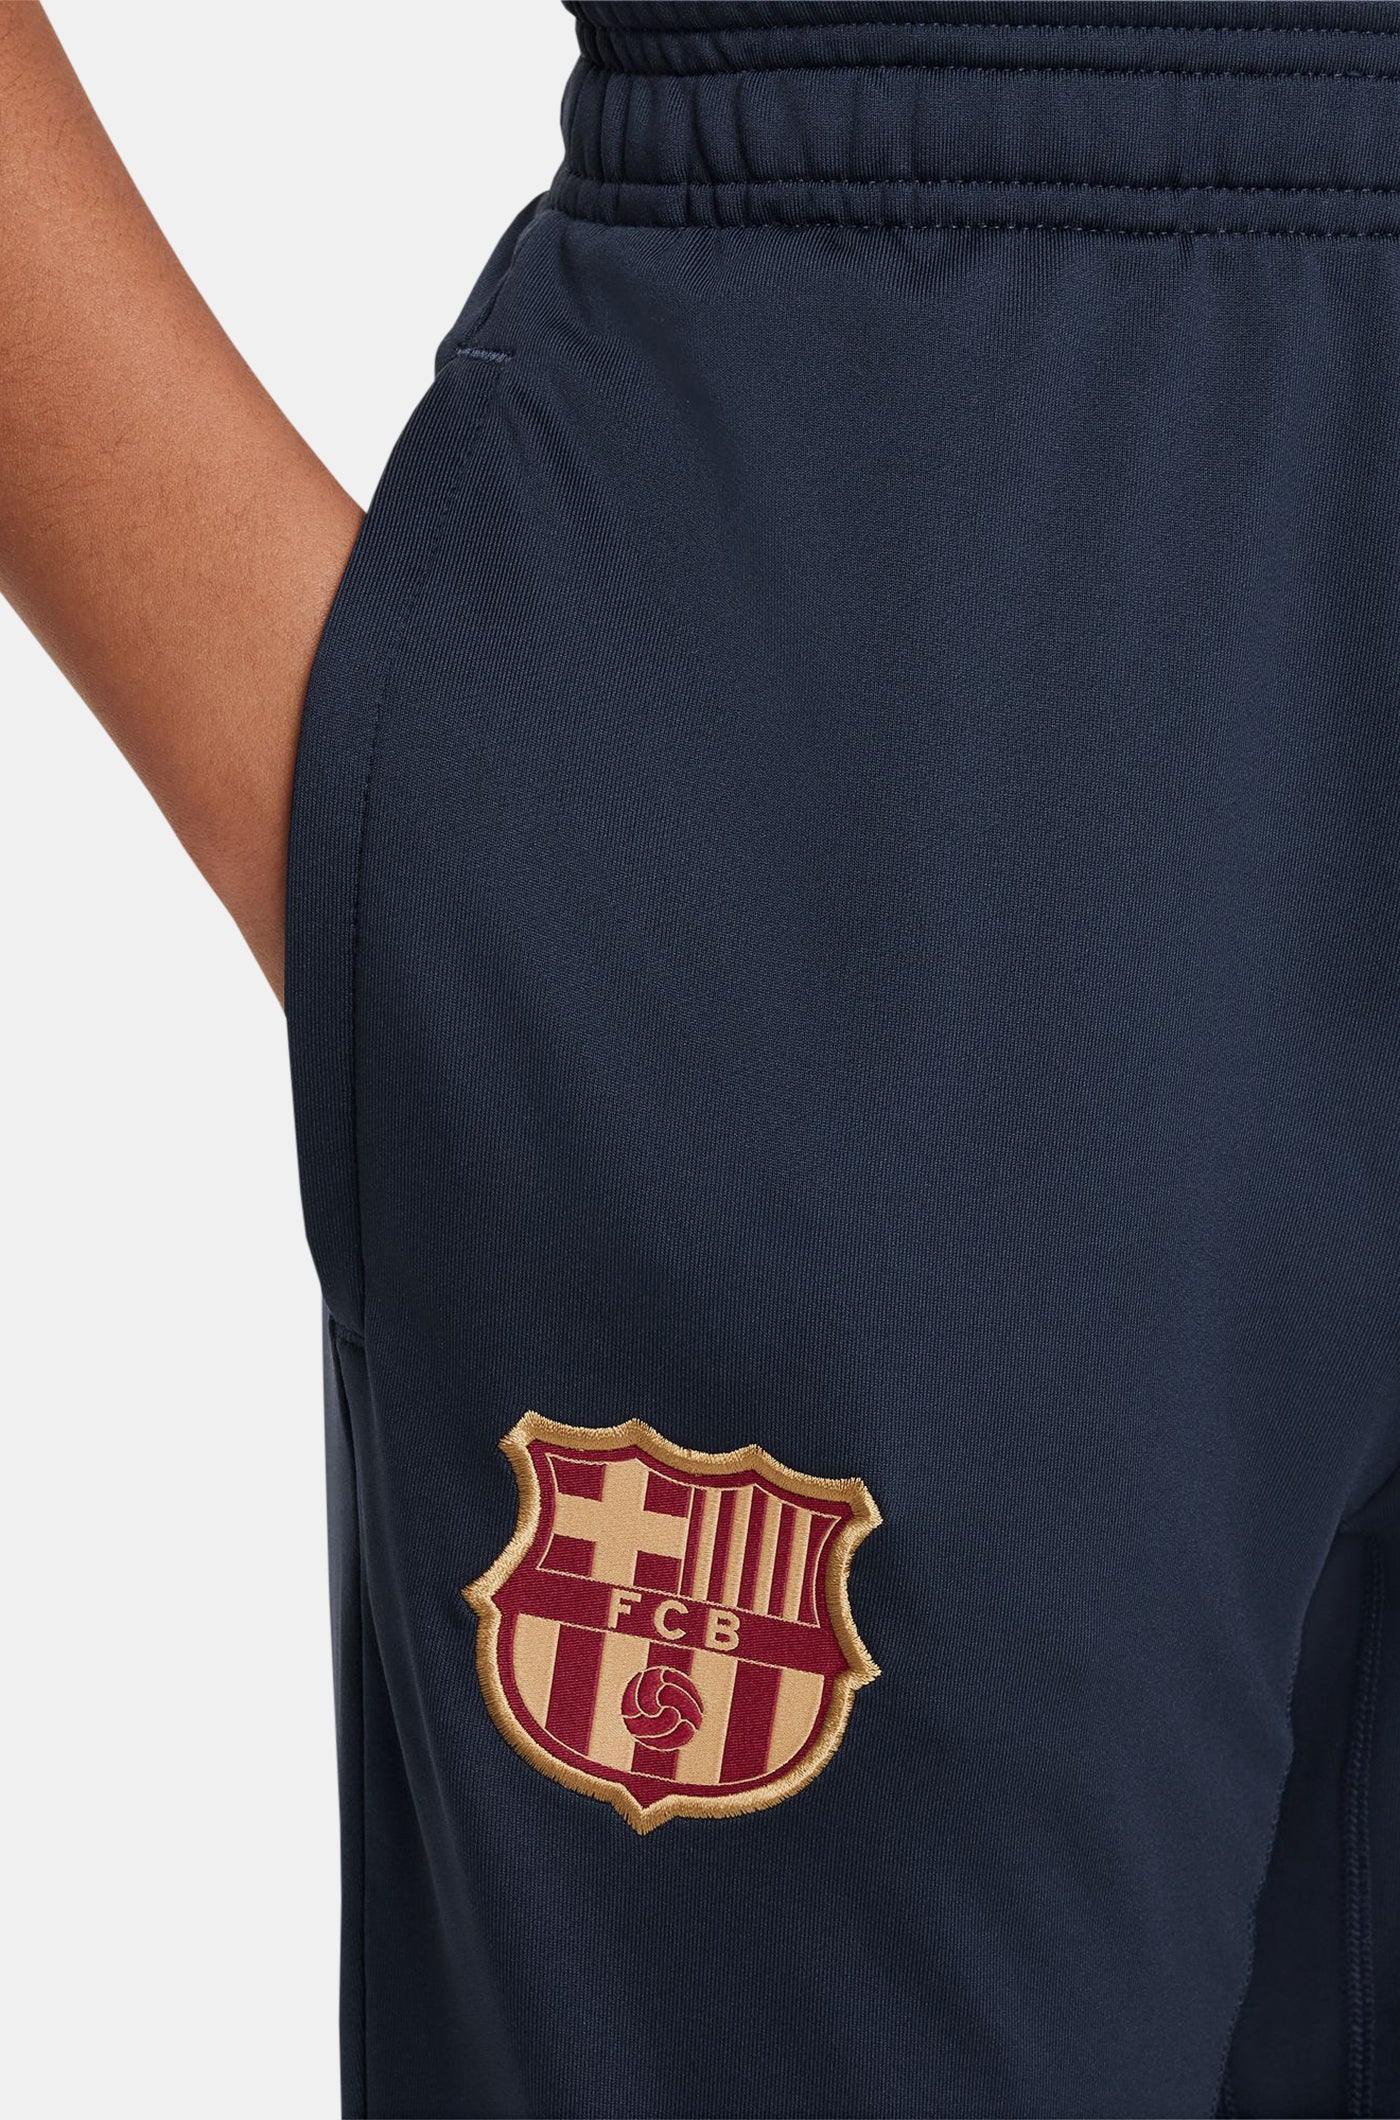 FC Barcelona obsidian Training Pants 23/24 - Junior